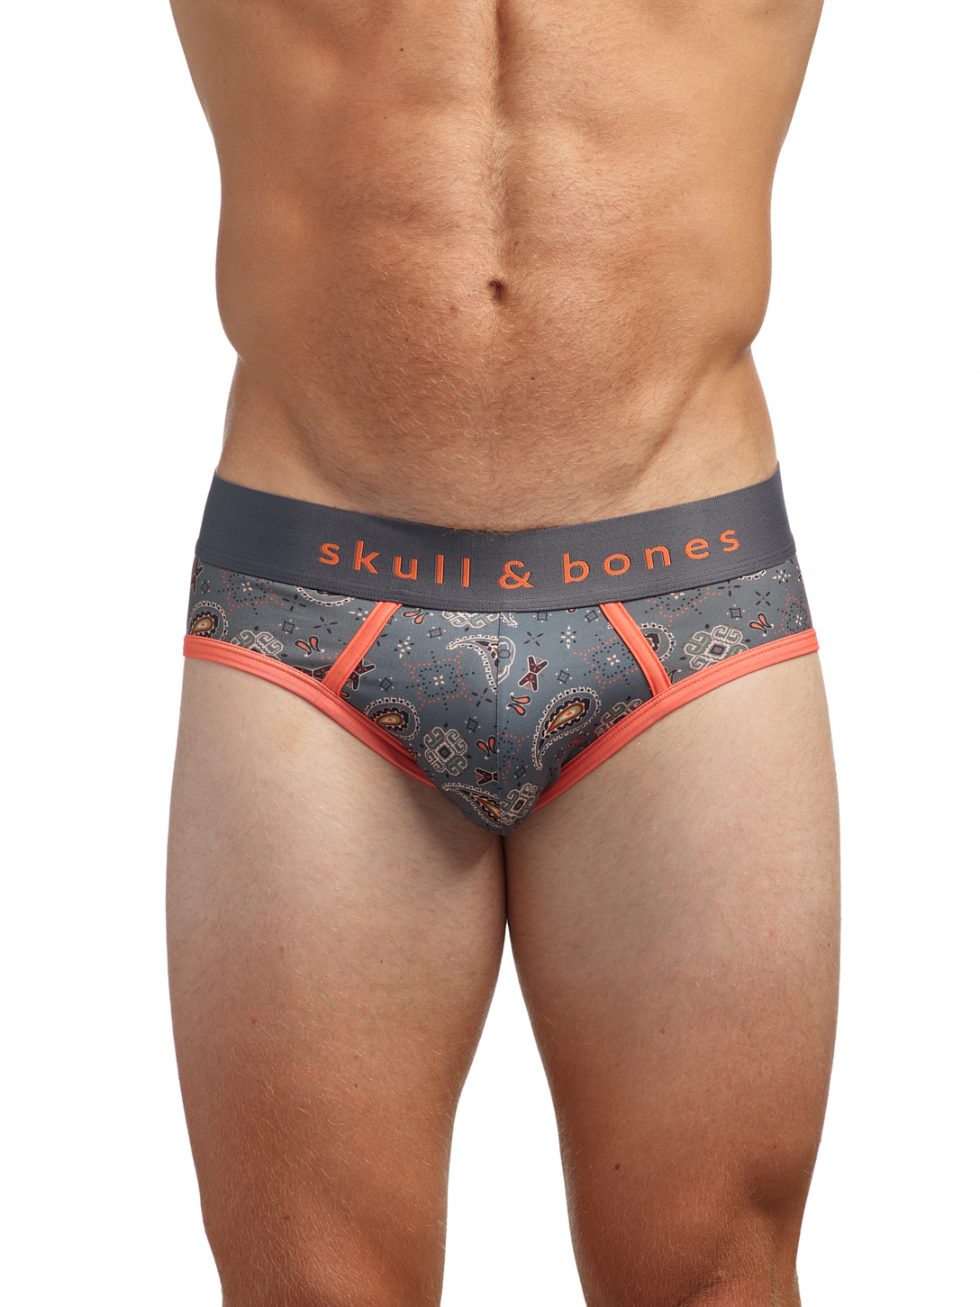 skull and bones underwear